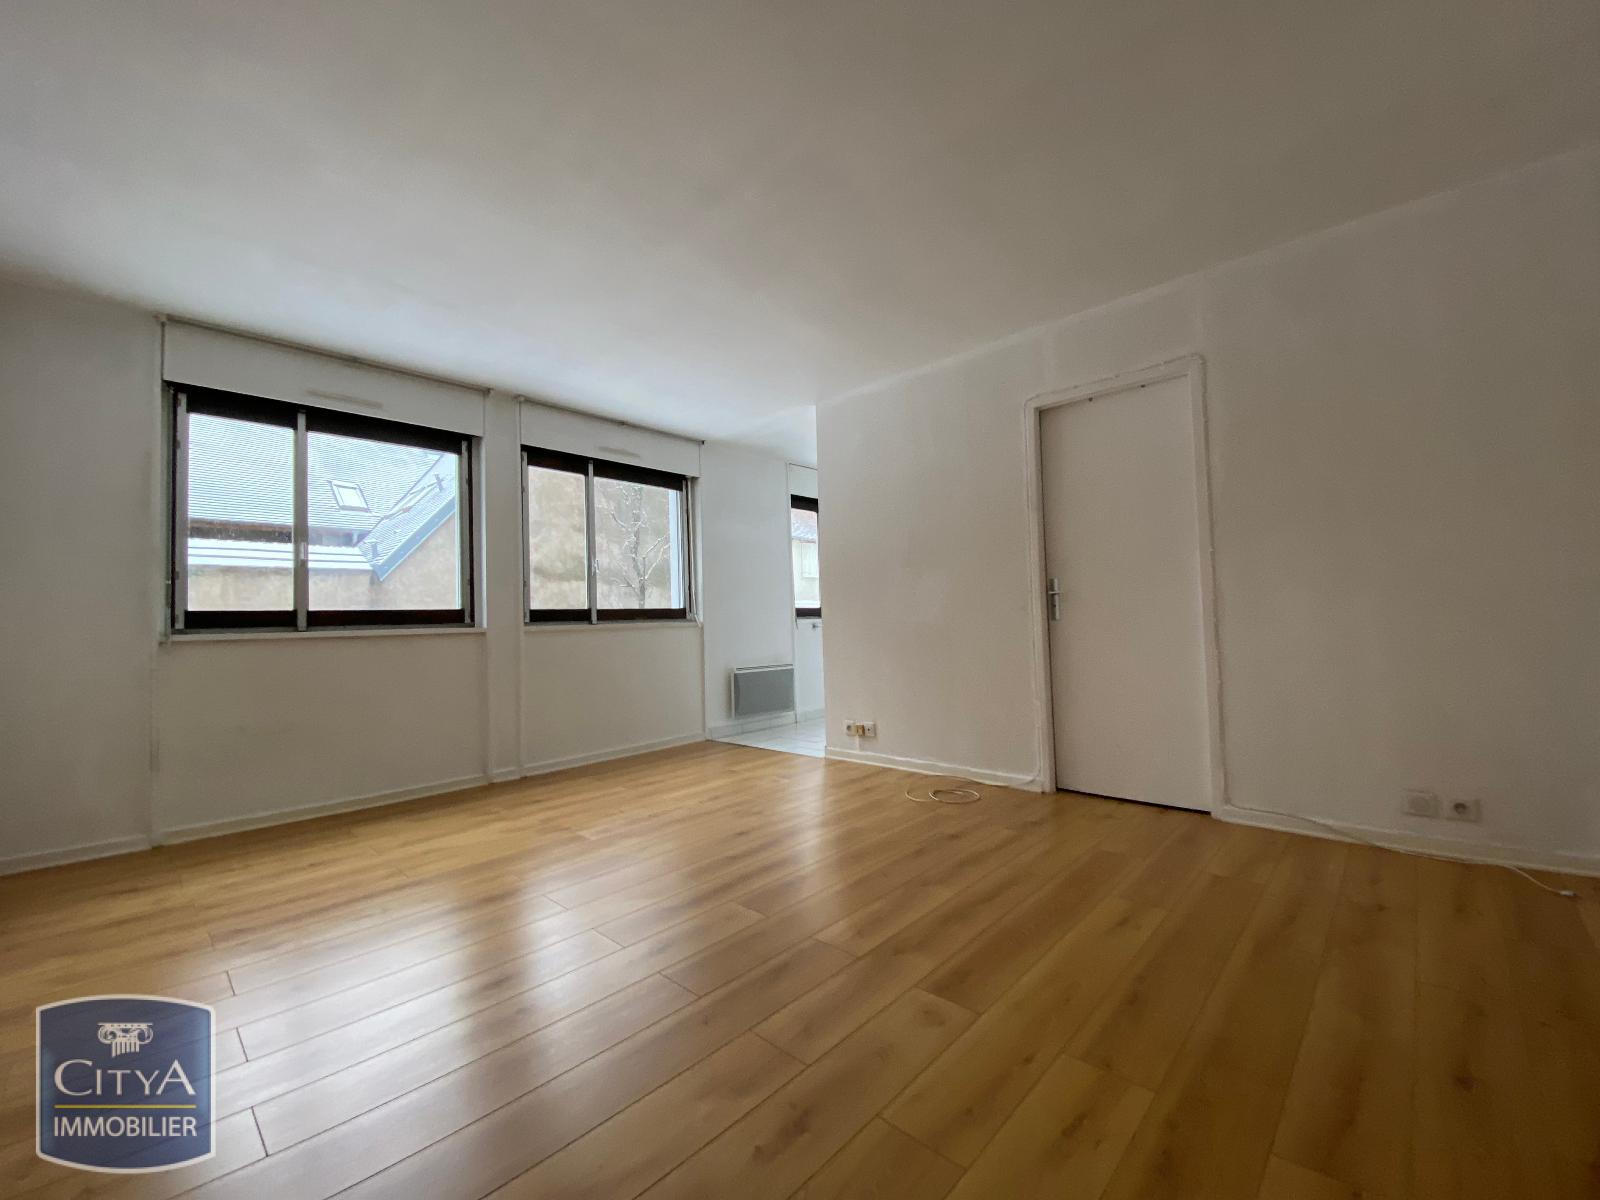 Location appartement Besançon (25000) 1 pièce 33.29m², 490€ | Citya